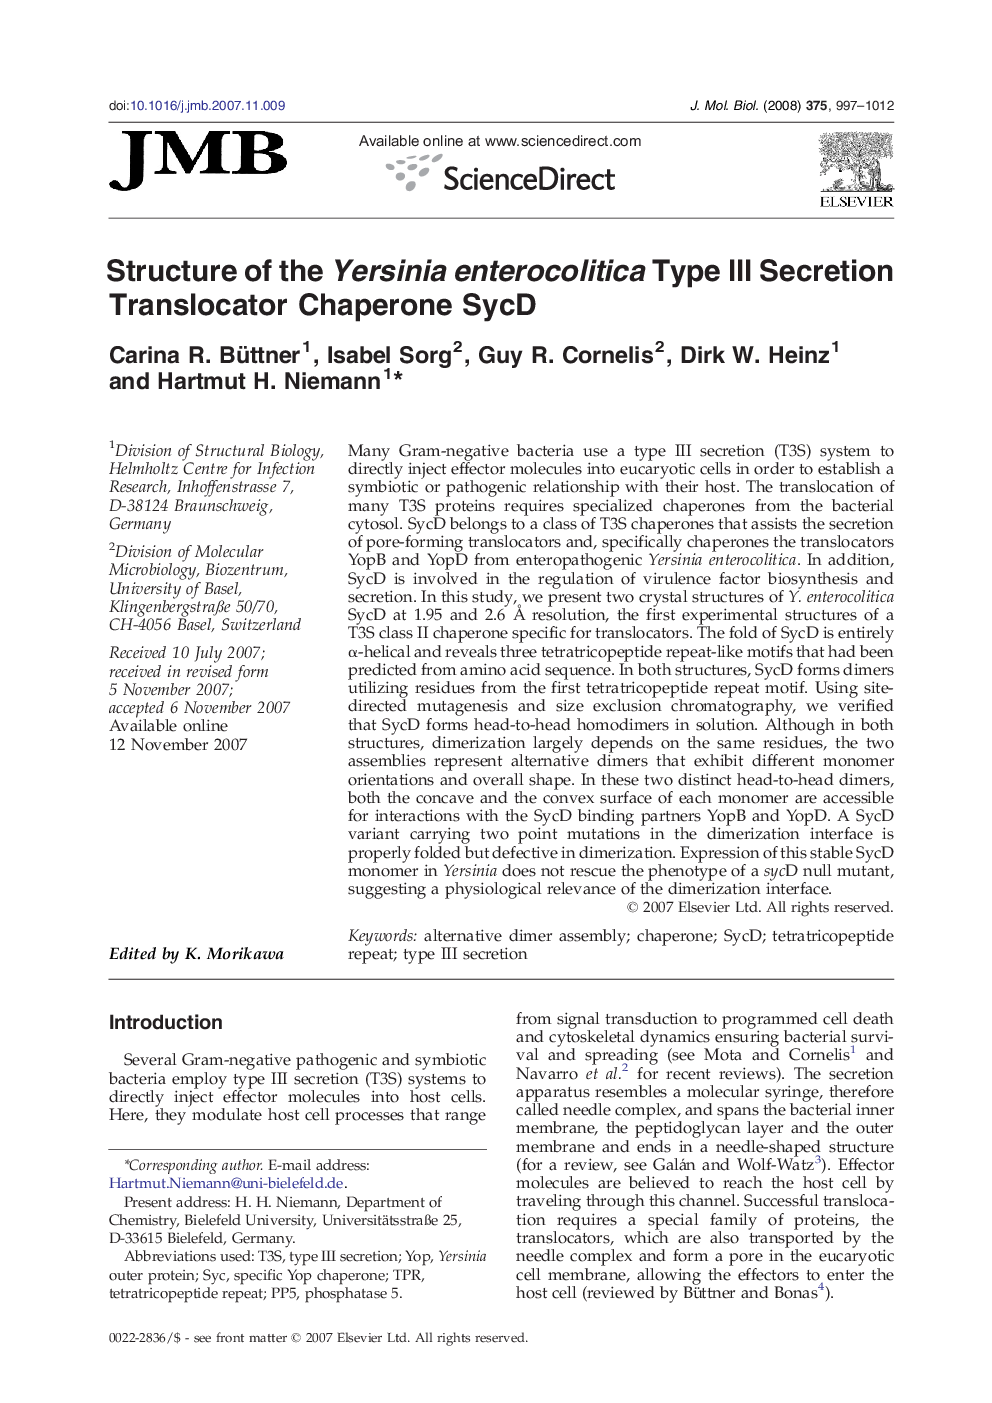 Structure of the Yersinia enterocolitica Type III Secretion Translocator Chaperone SycD